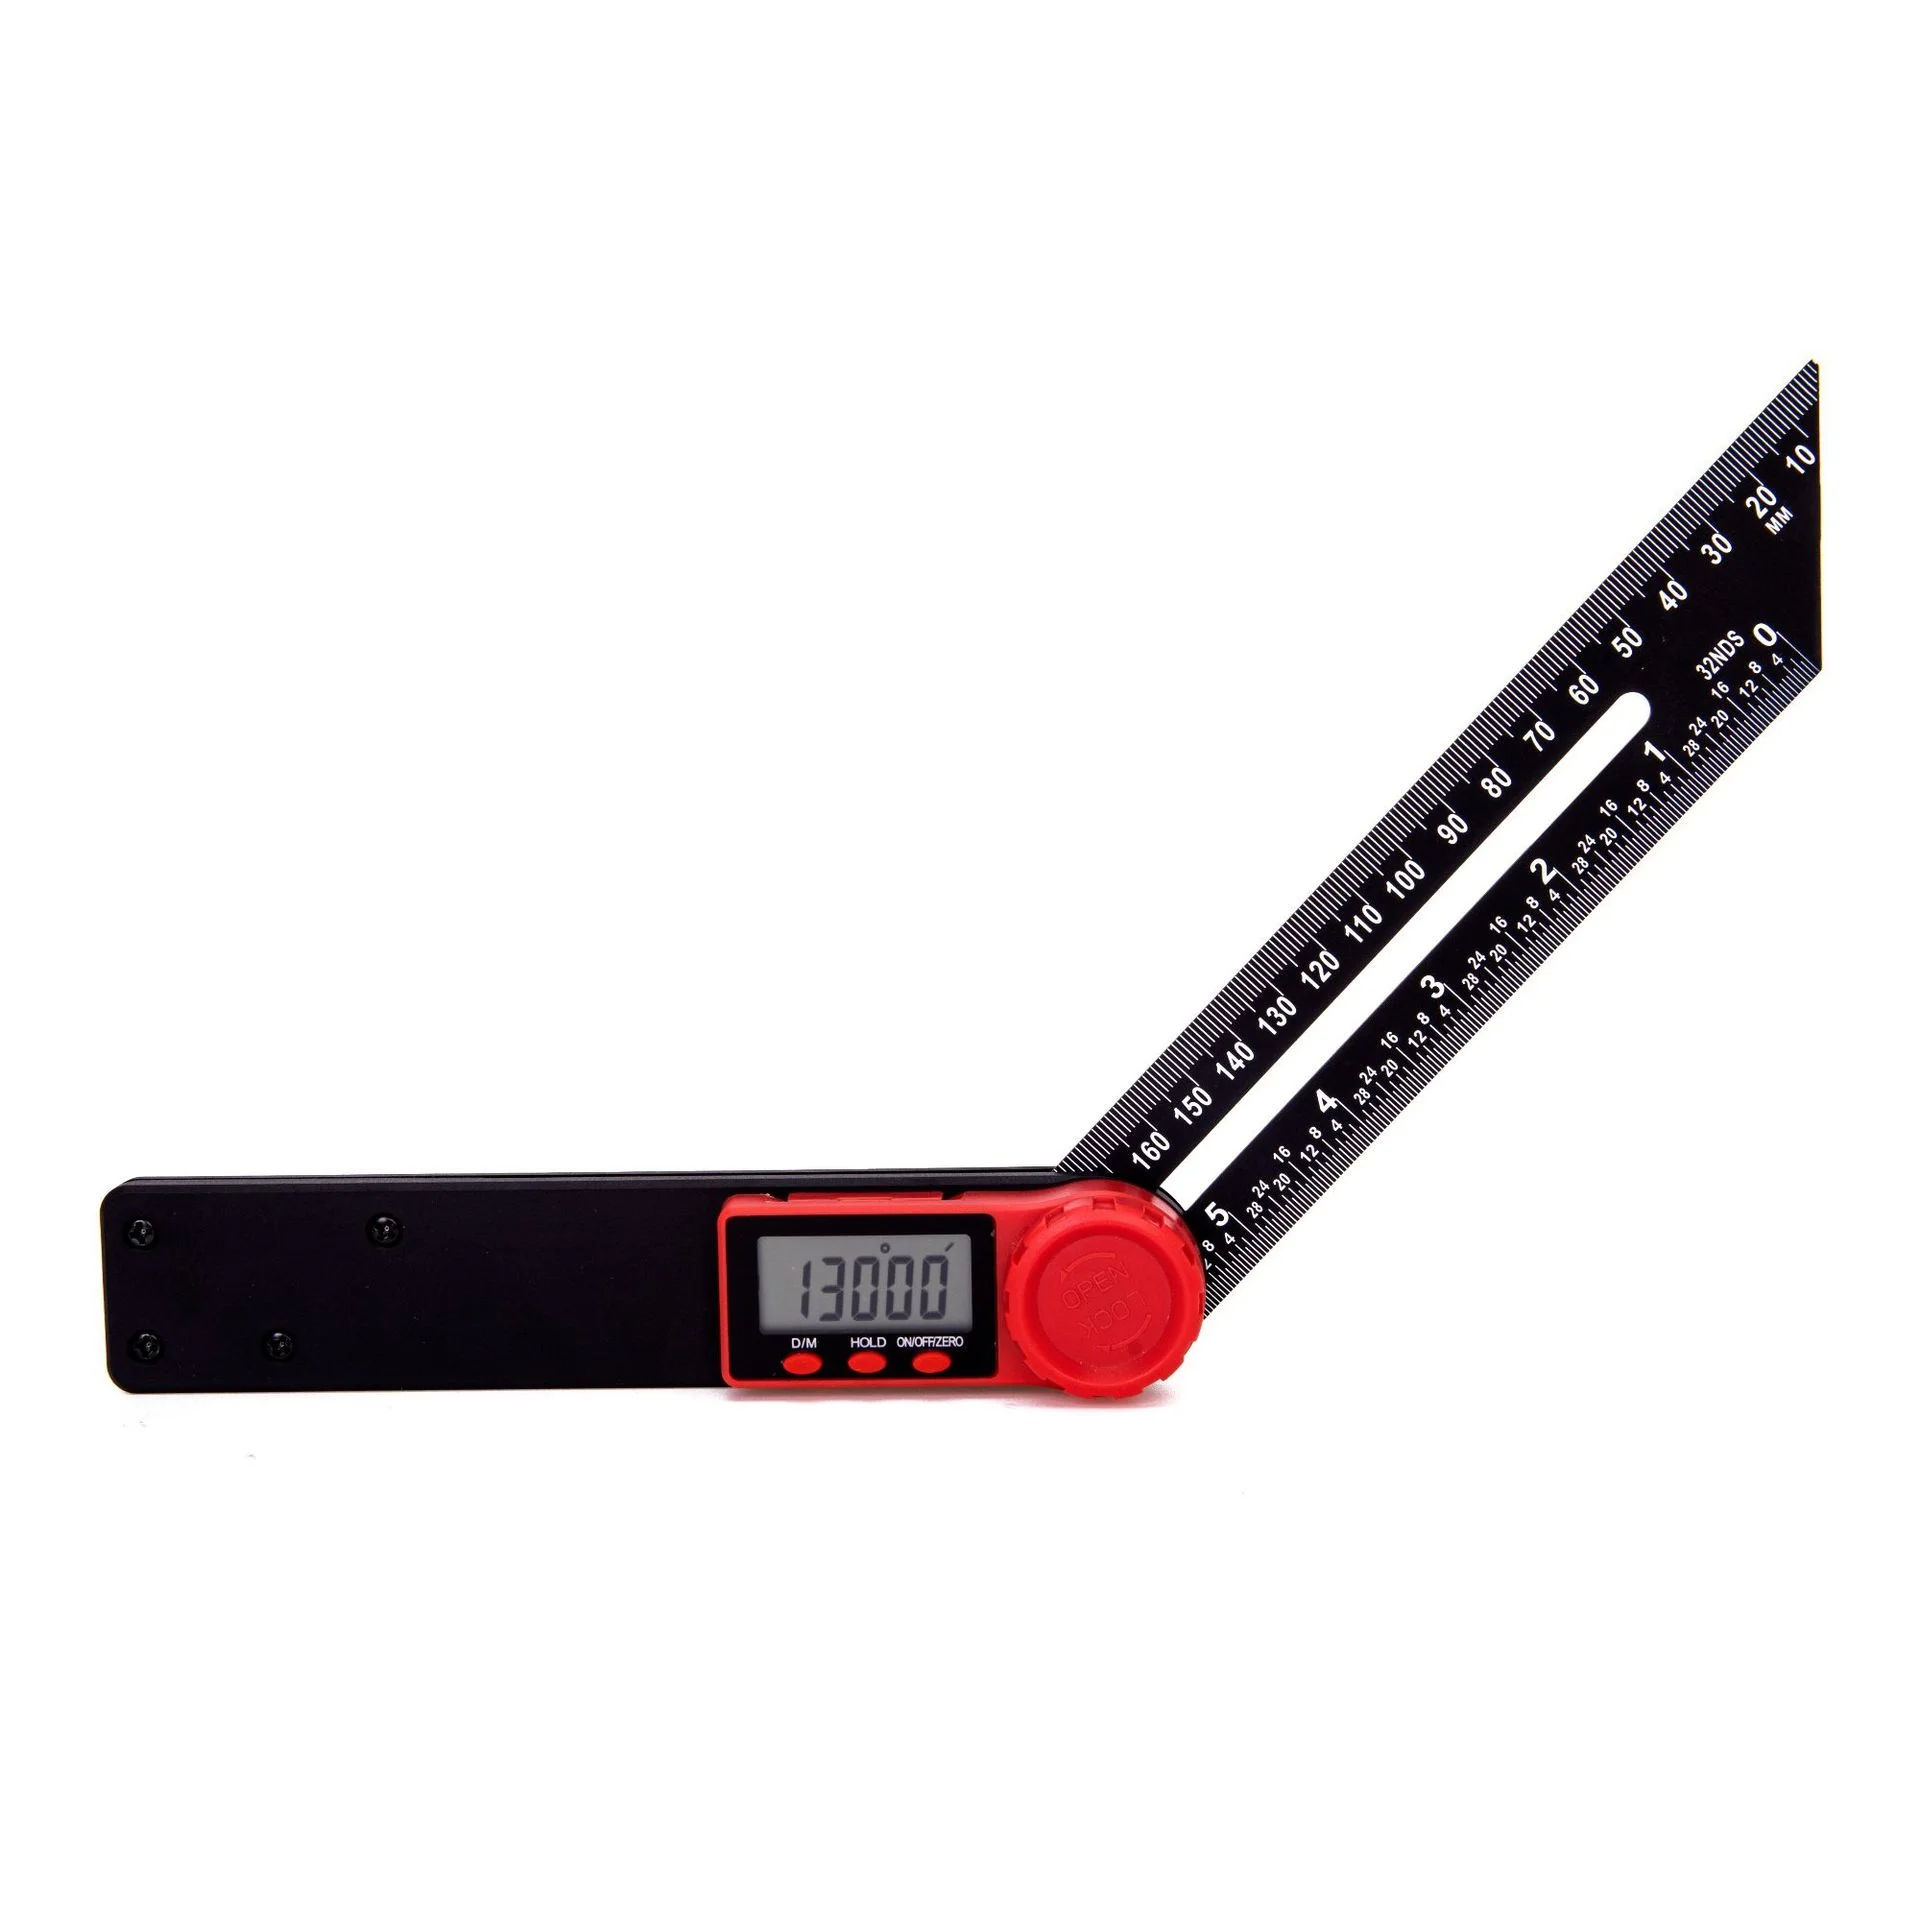 0-180mm factory  360 Protractor Goniometer measuring digital Angle  finder